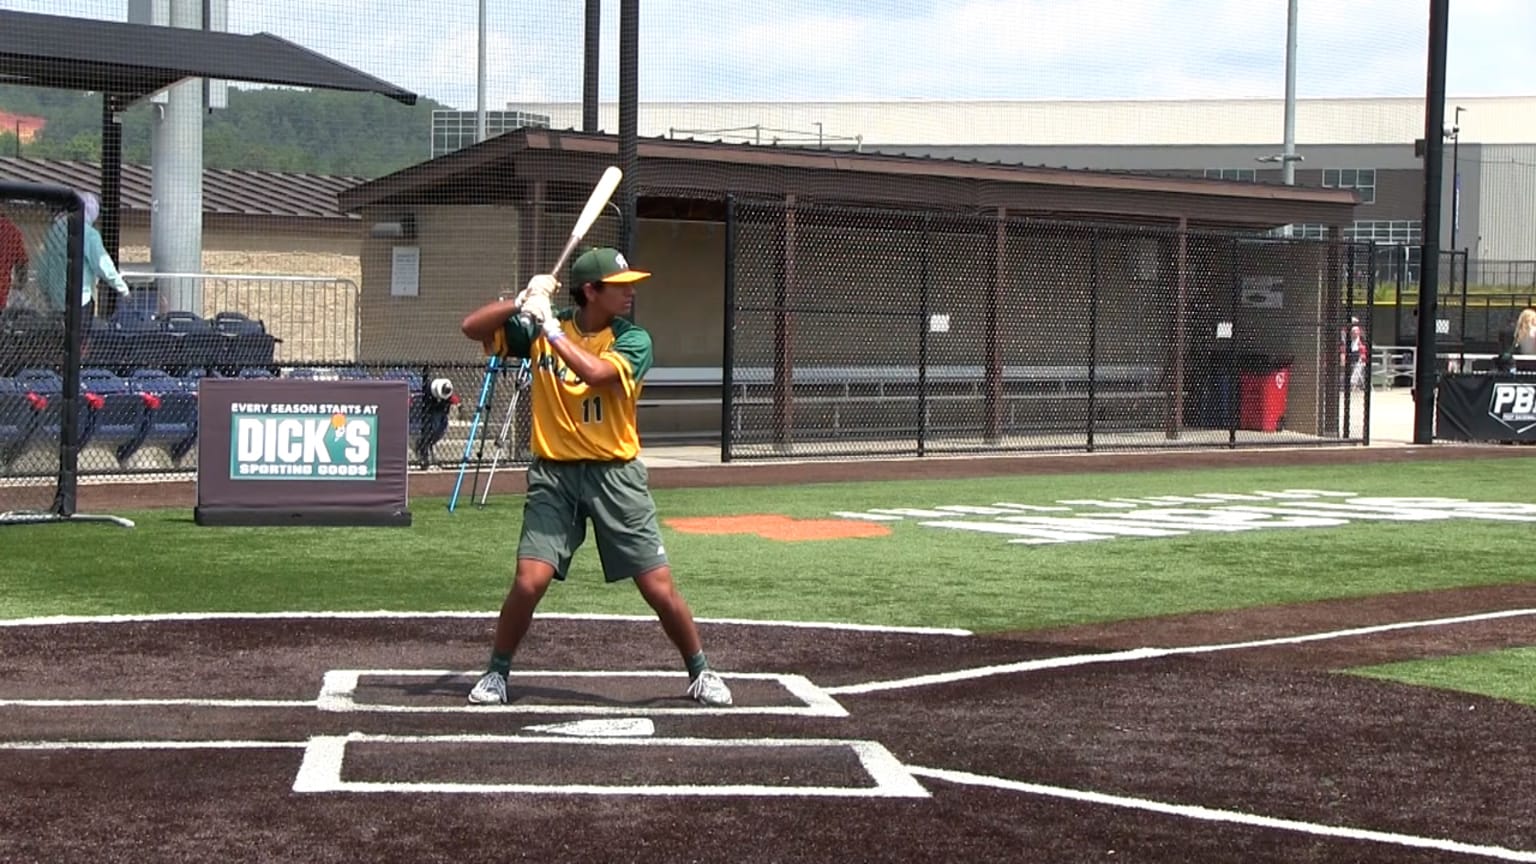 Davis Diaz: A look at the Vandy baseball third baseman